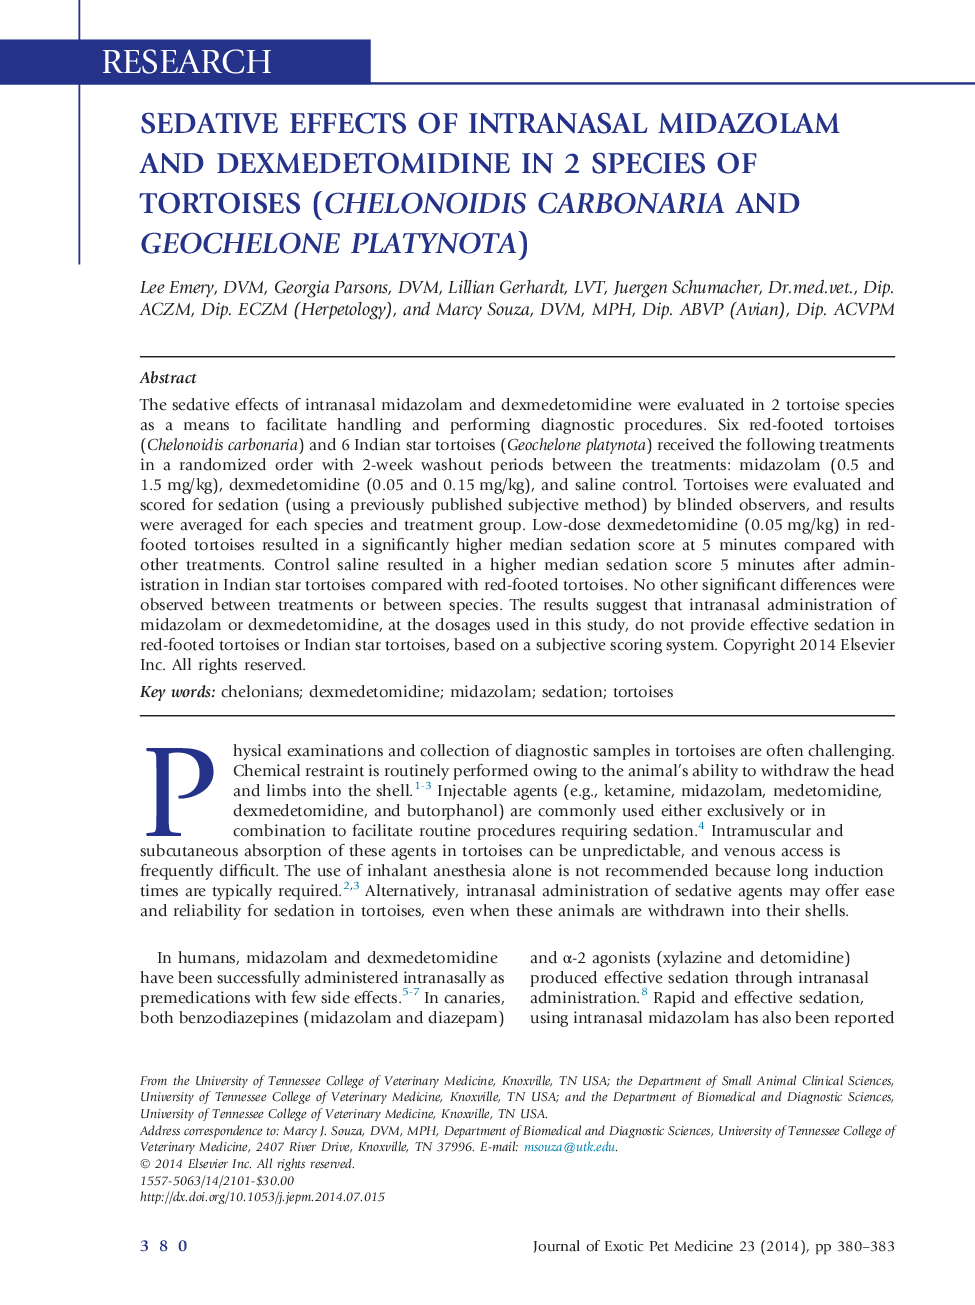 Sedative Effects of Intranasal Midazolam and Dexmedetomidine in 2 Species of Tortoises (Chelonoidis carbonaria and Geochelone platynota)